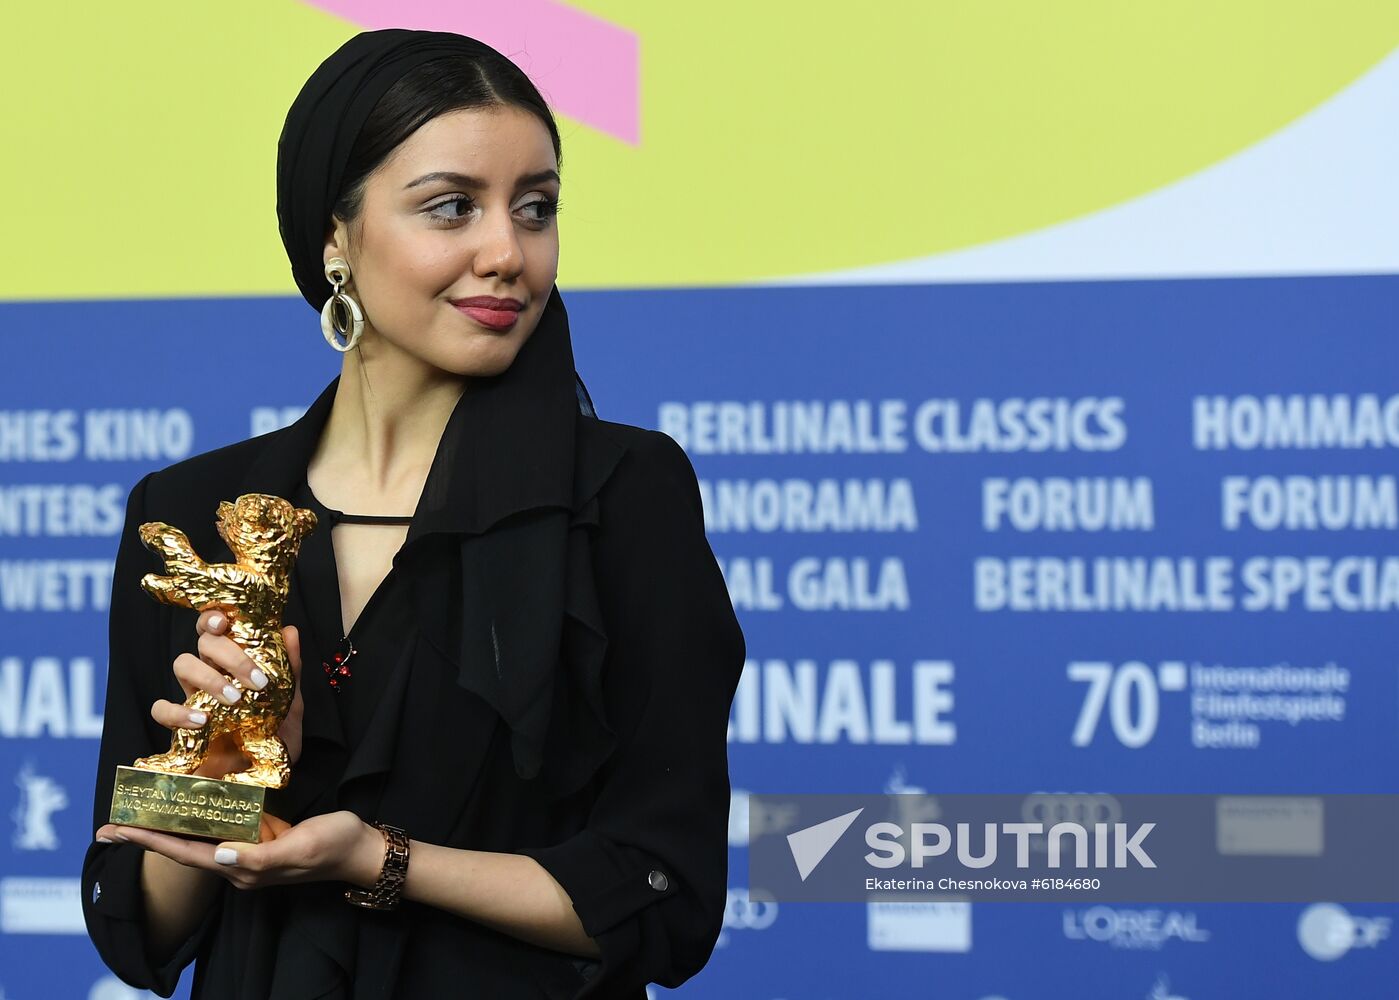 Germany Berlinale Closing Ceremony